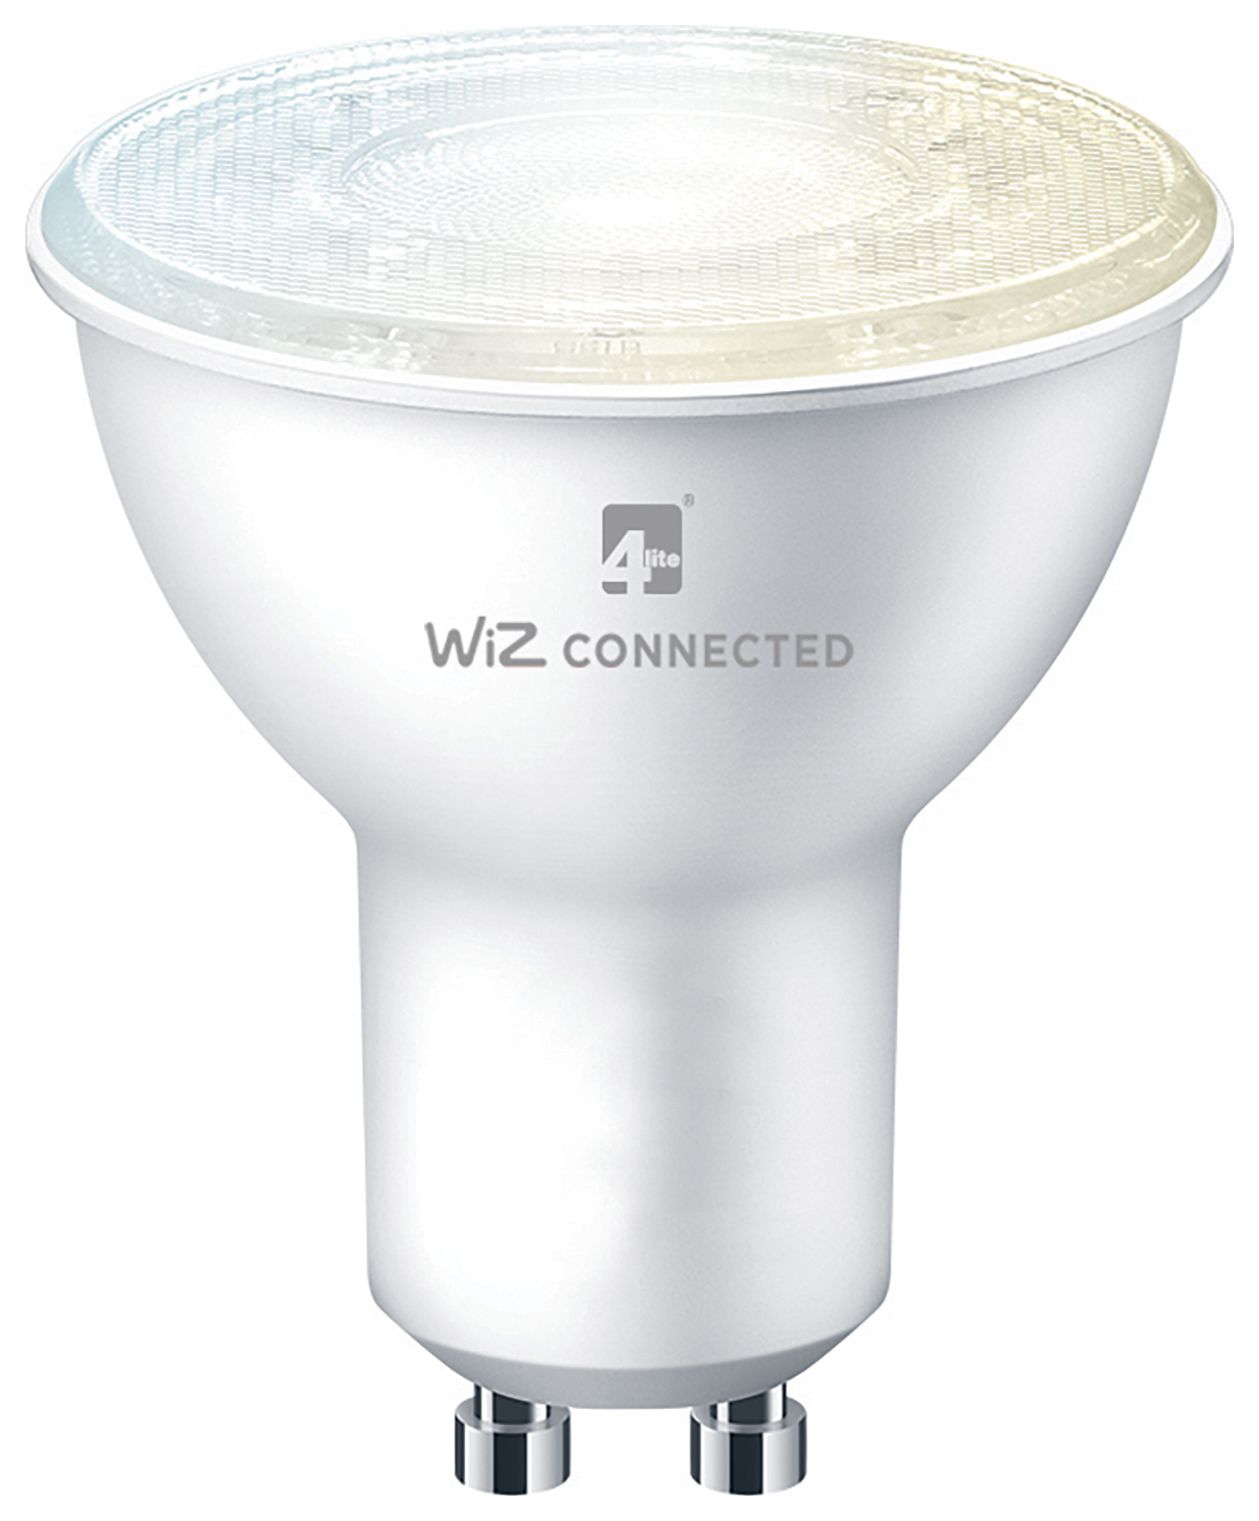 4lite WiZ Connected SMART WiFi & Bluetooth GU10 Bulb - Tuneable White